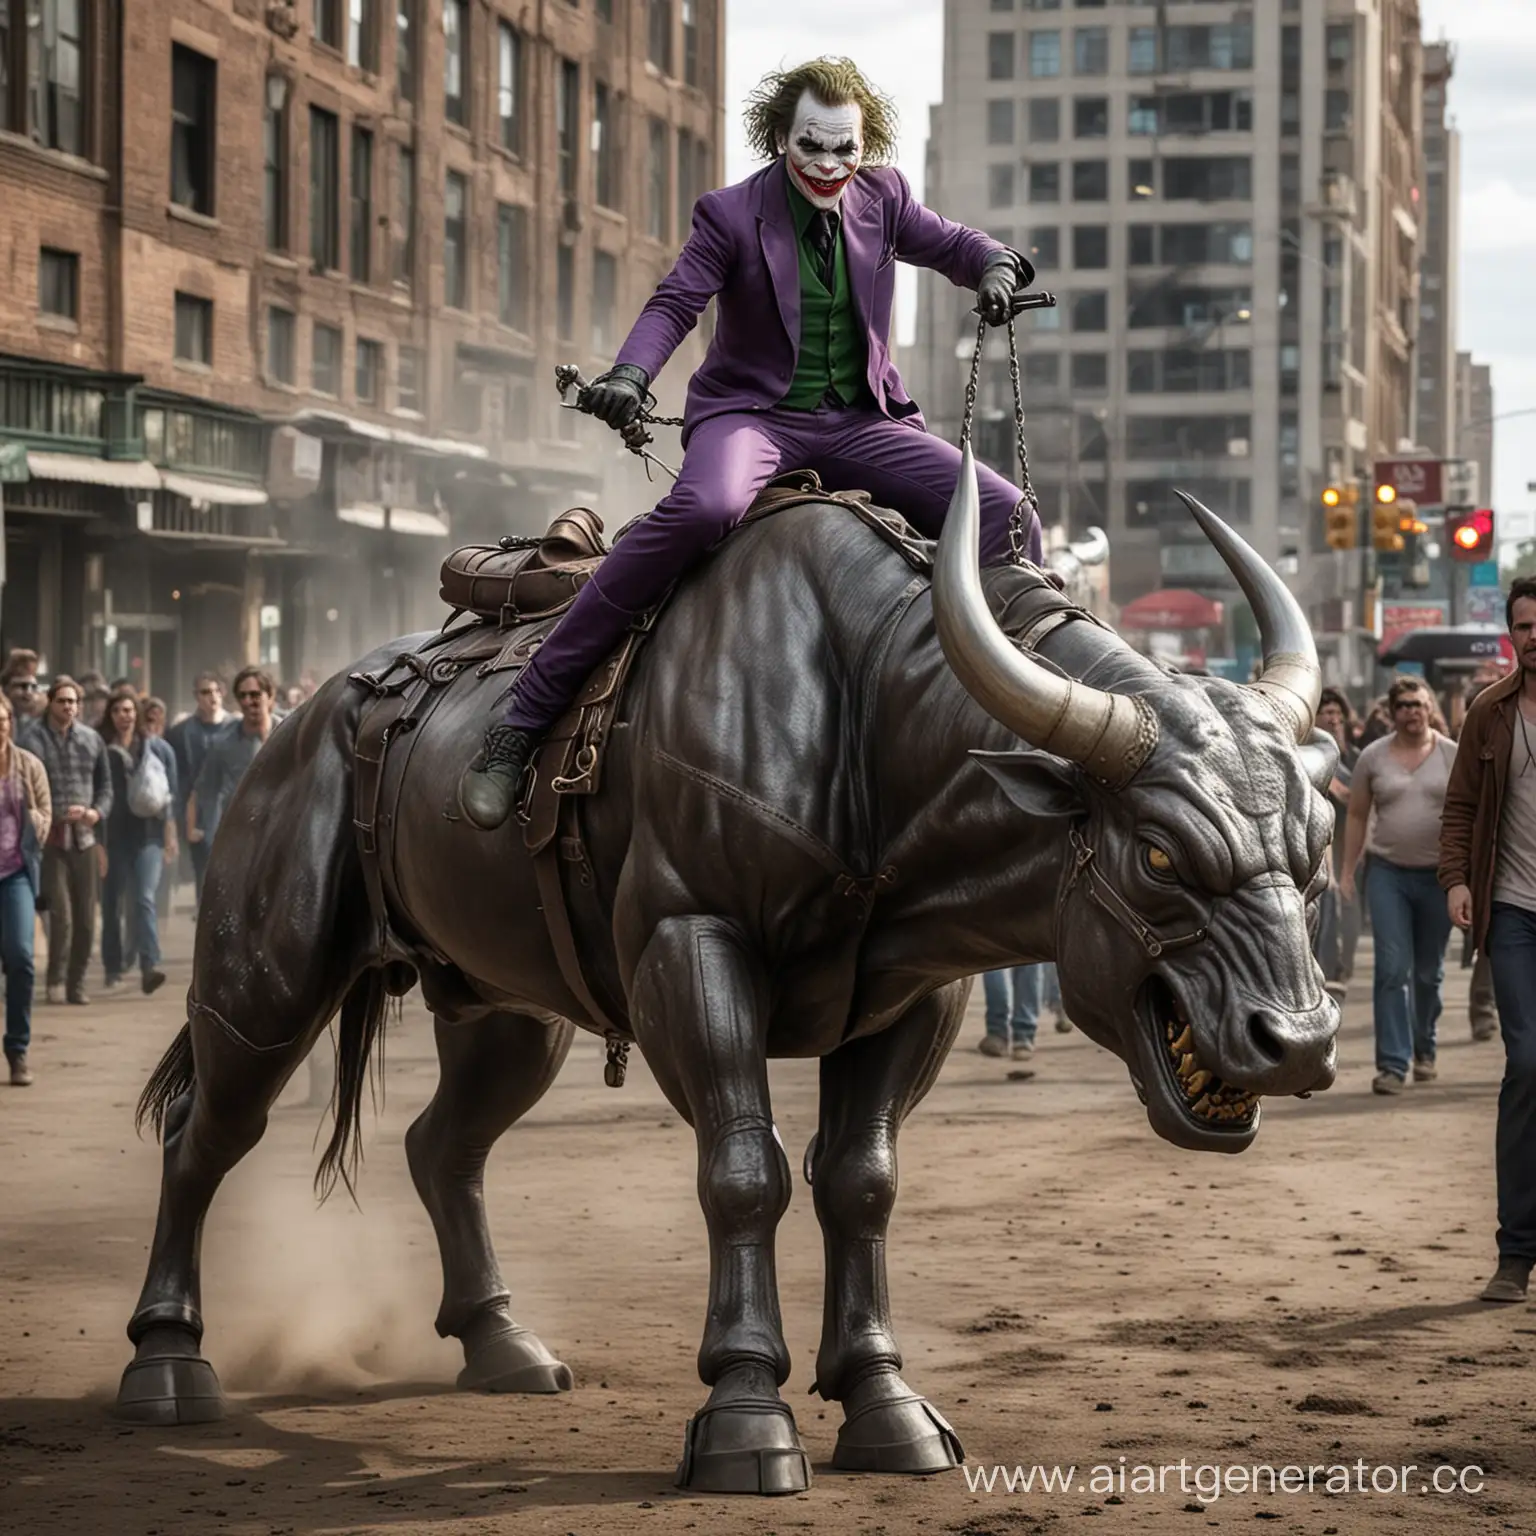 The-Joker-Riding-a-Steel-Bull-with-a-Fan-in-Hand